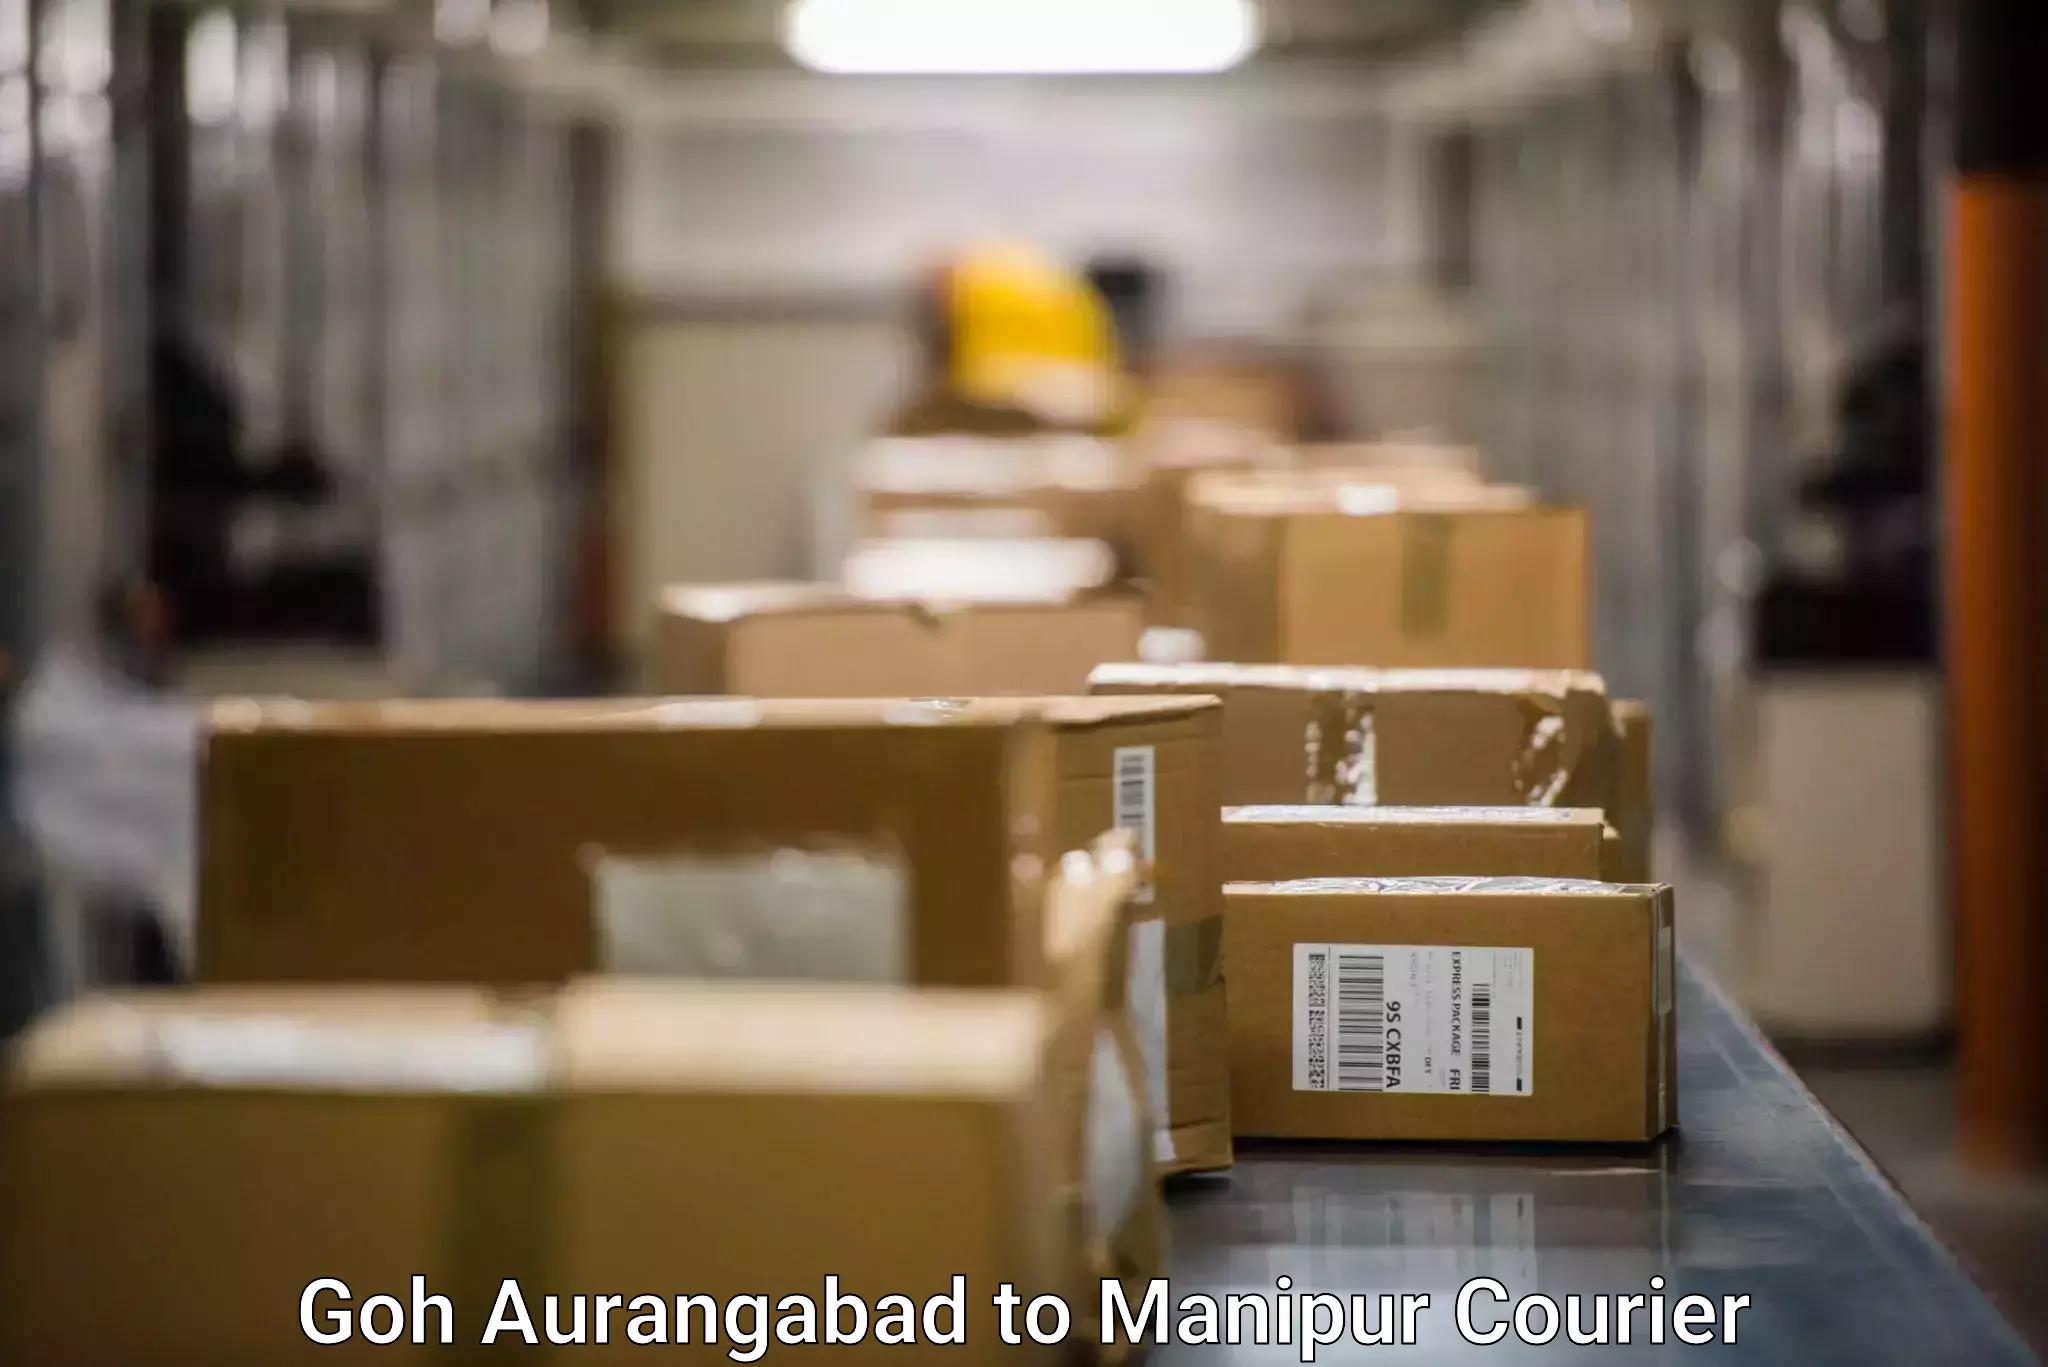 Flexible delivery scheduling Goh Aurangabad to Manipur